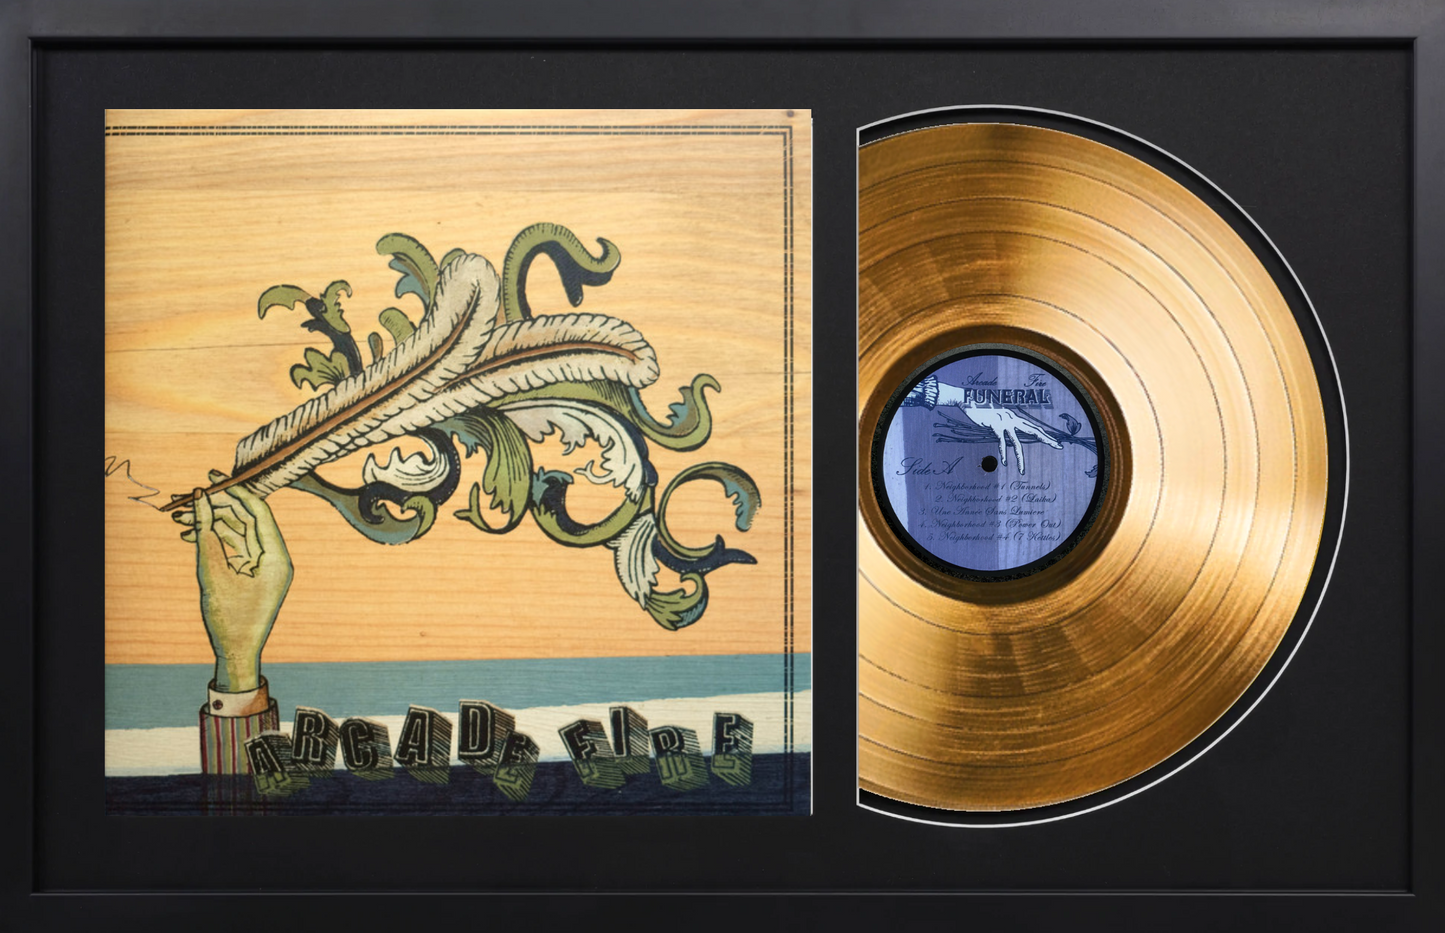 Arcade Fire - Funeral - 14K Gold Plated Vinyl